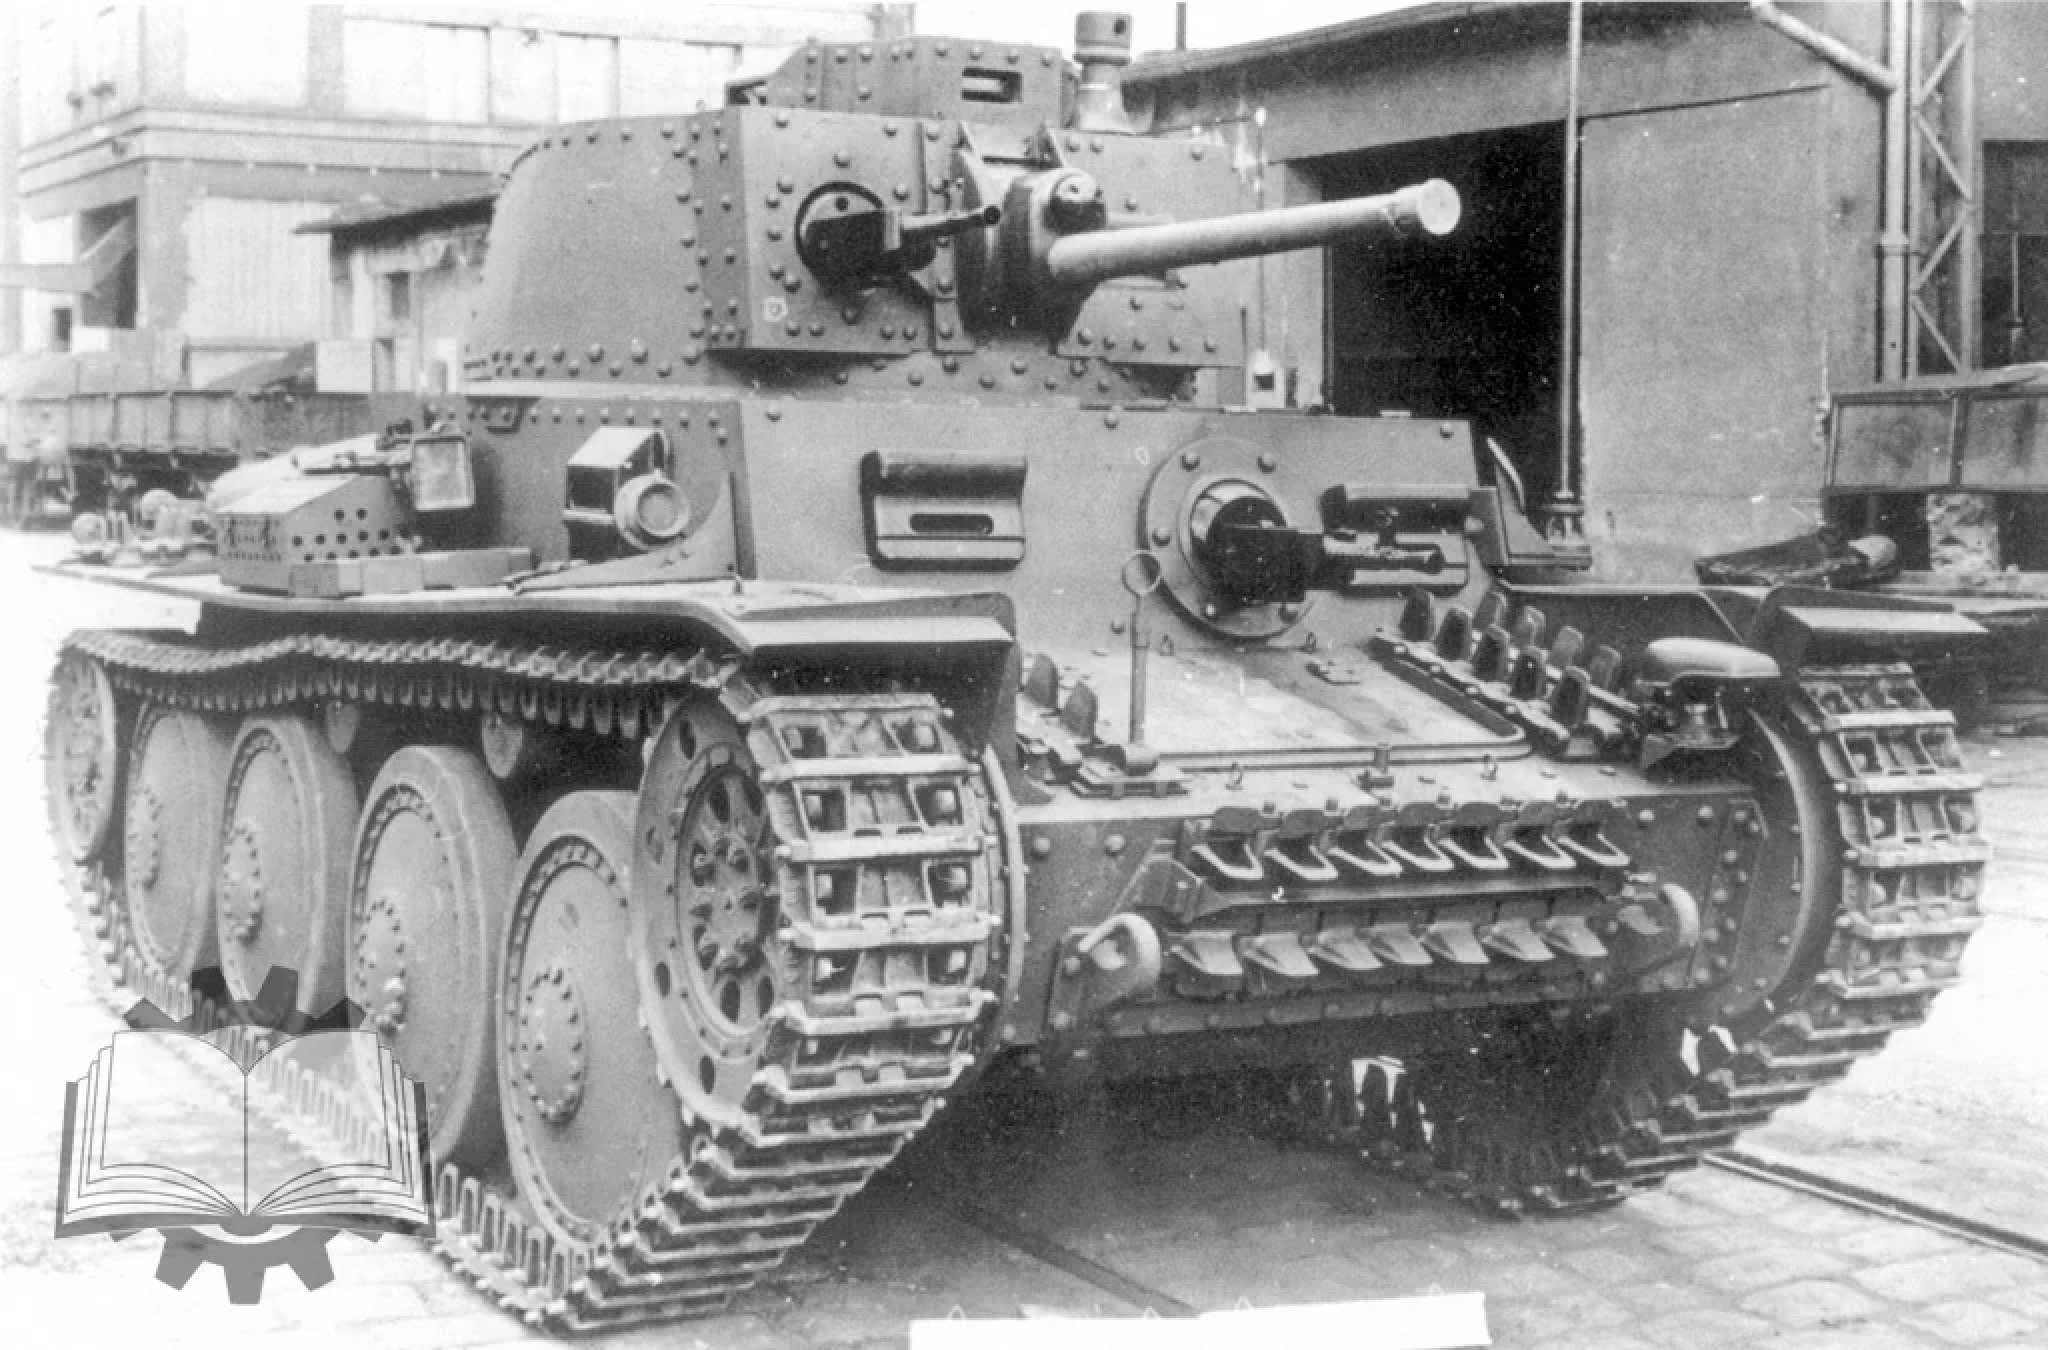 Pz kpfw 38. Немецкий танк Прага 38t g. Lt vz.38 PZKPFW 38 T. Танк Panzer 38 t. Чешский танк 38 t.